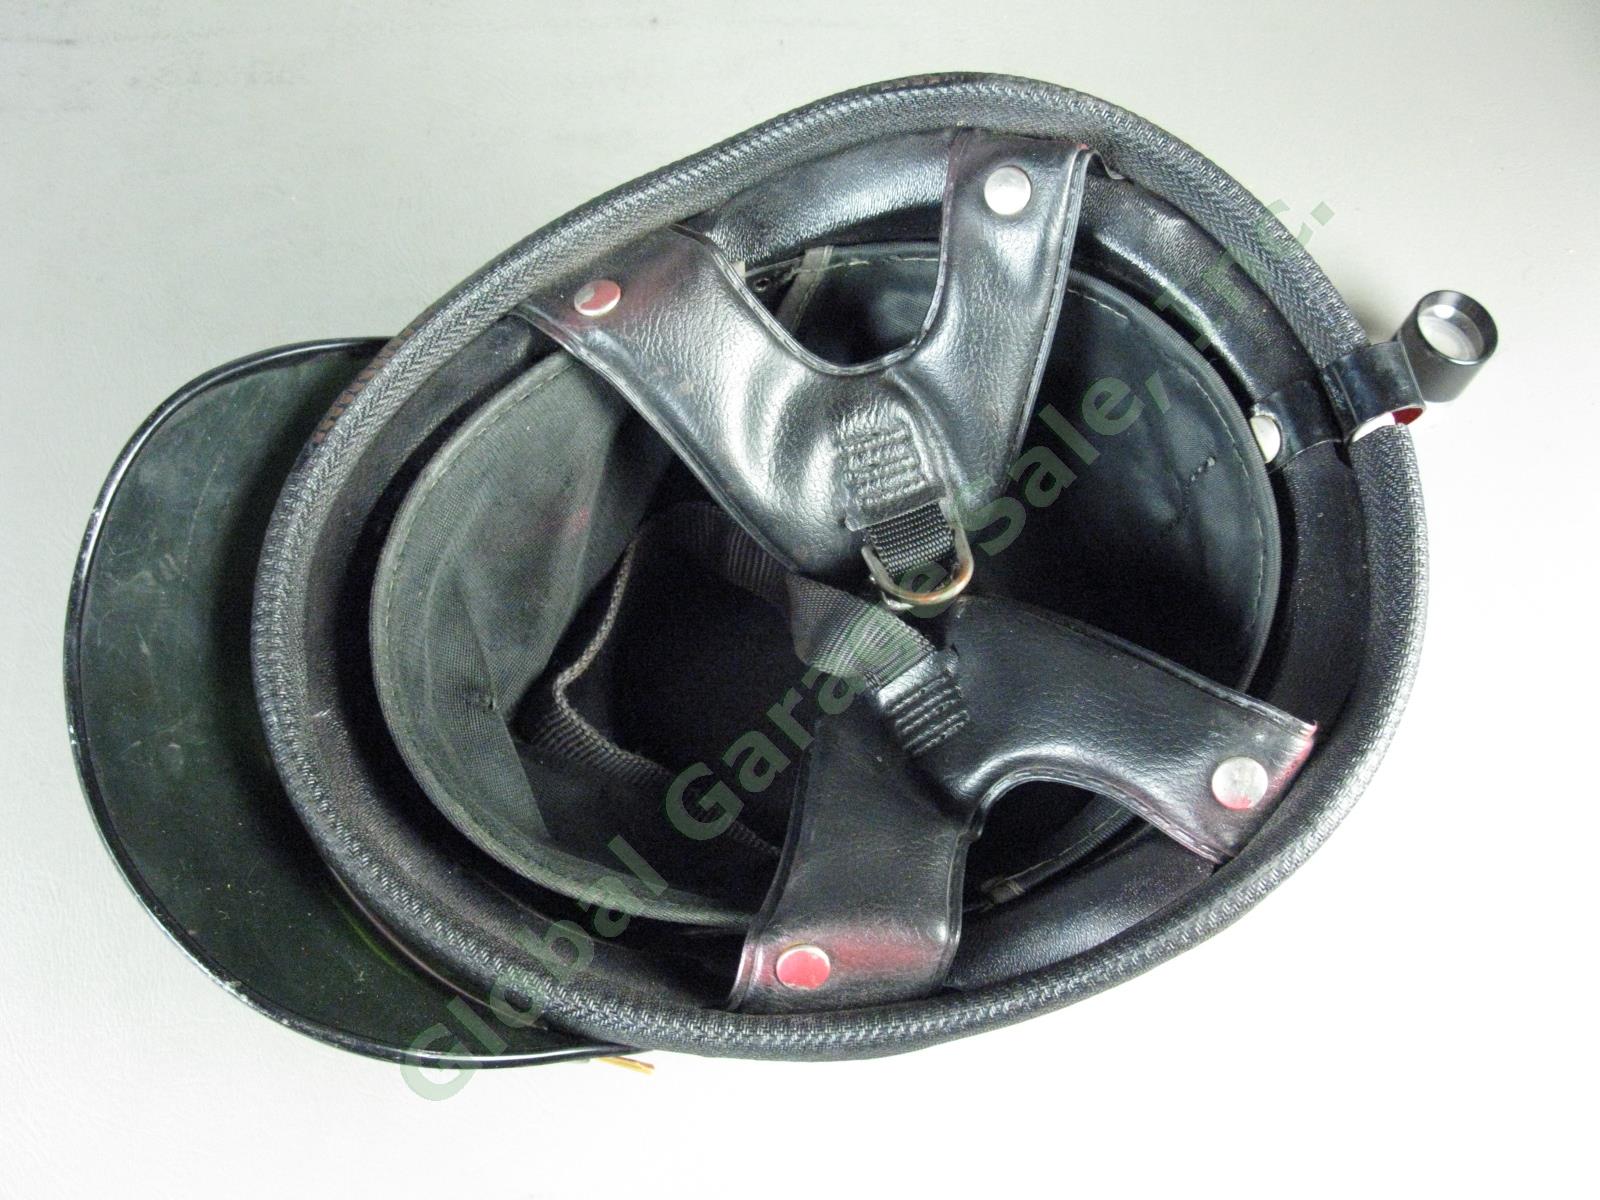 Vtg Red Buco Motorcycle Half Helmet w/Liner + Green Visor Adjustable Sz 6 1/2-8 6